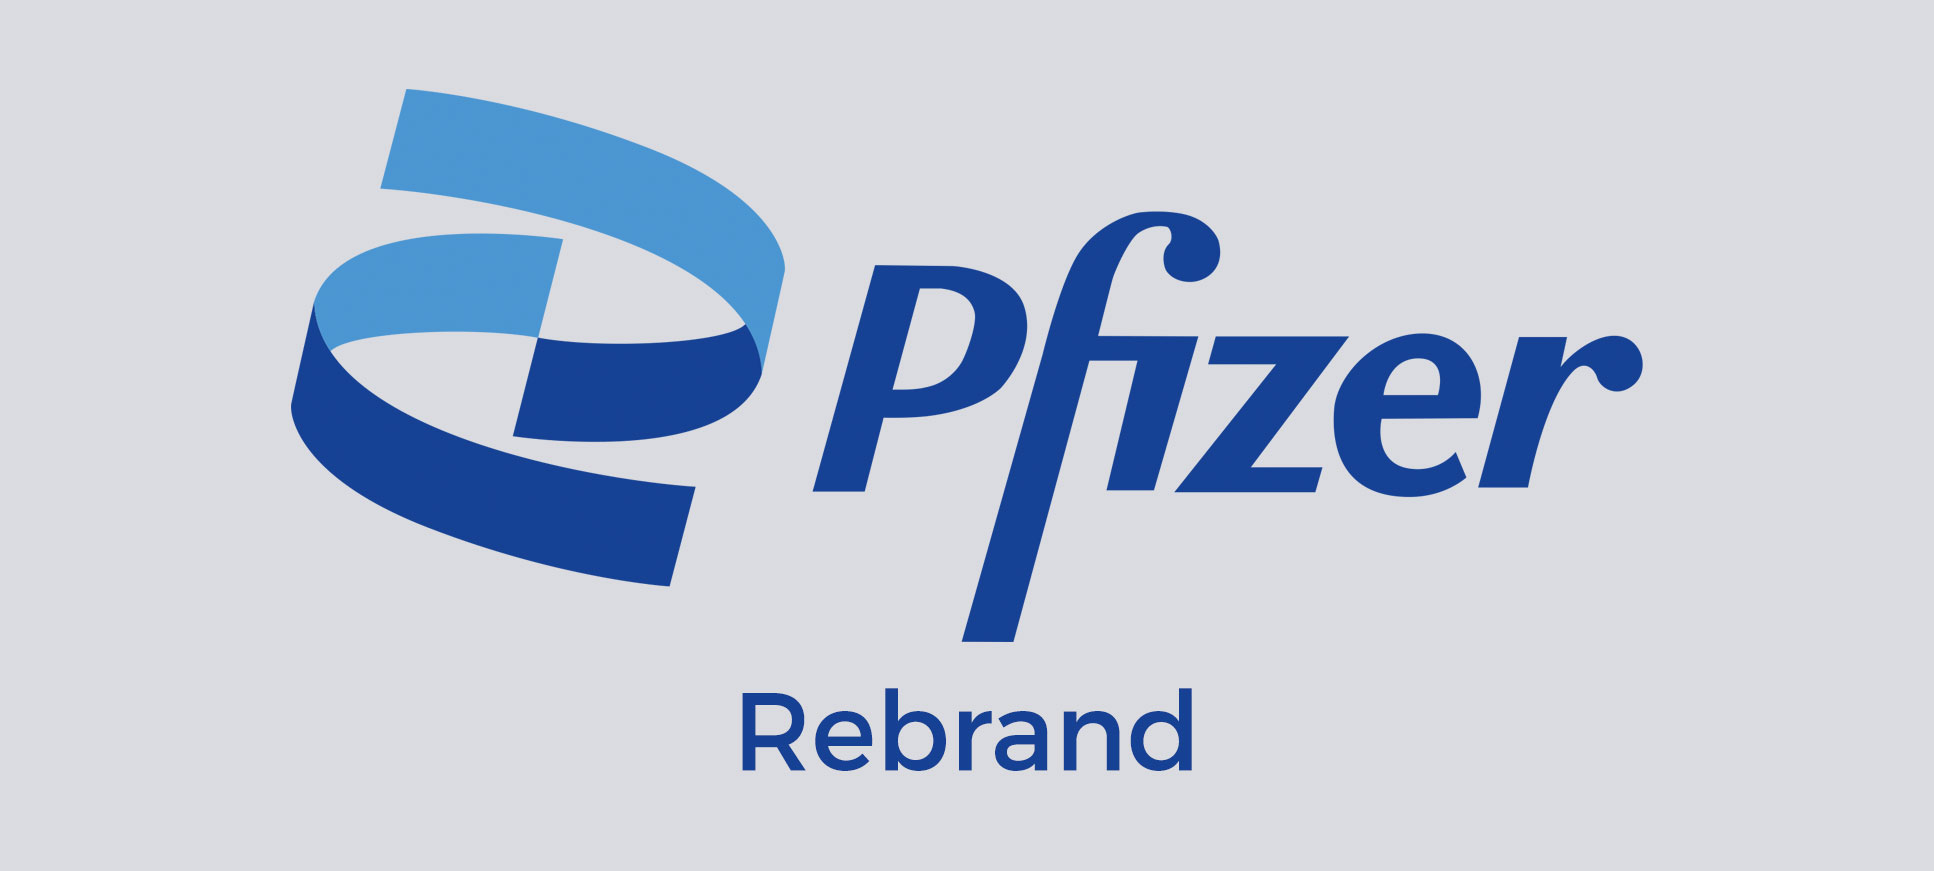 Pfizer Rebrand